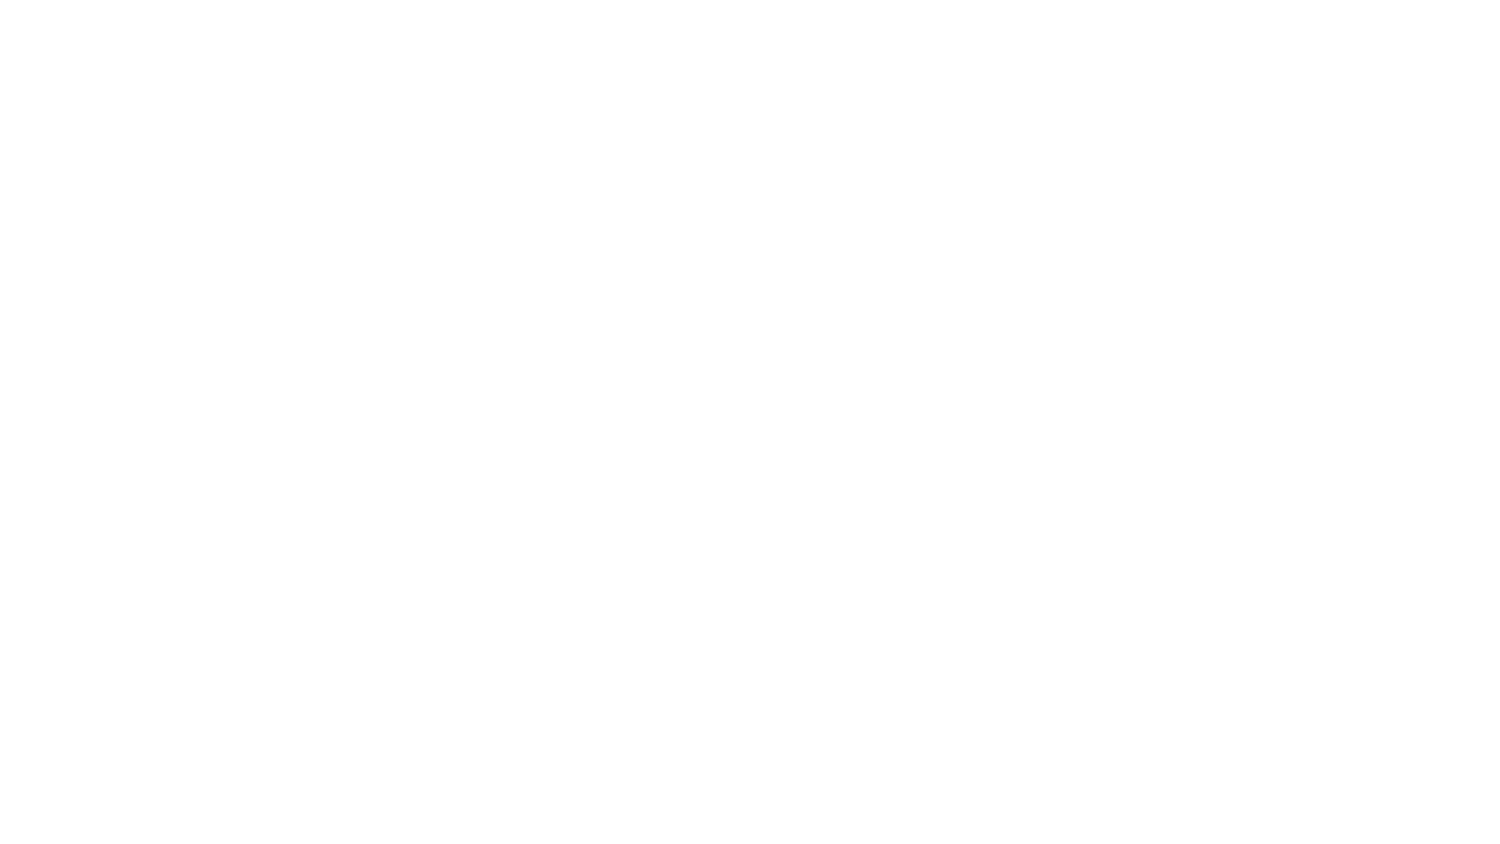 Buba Design